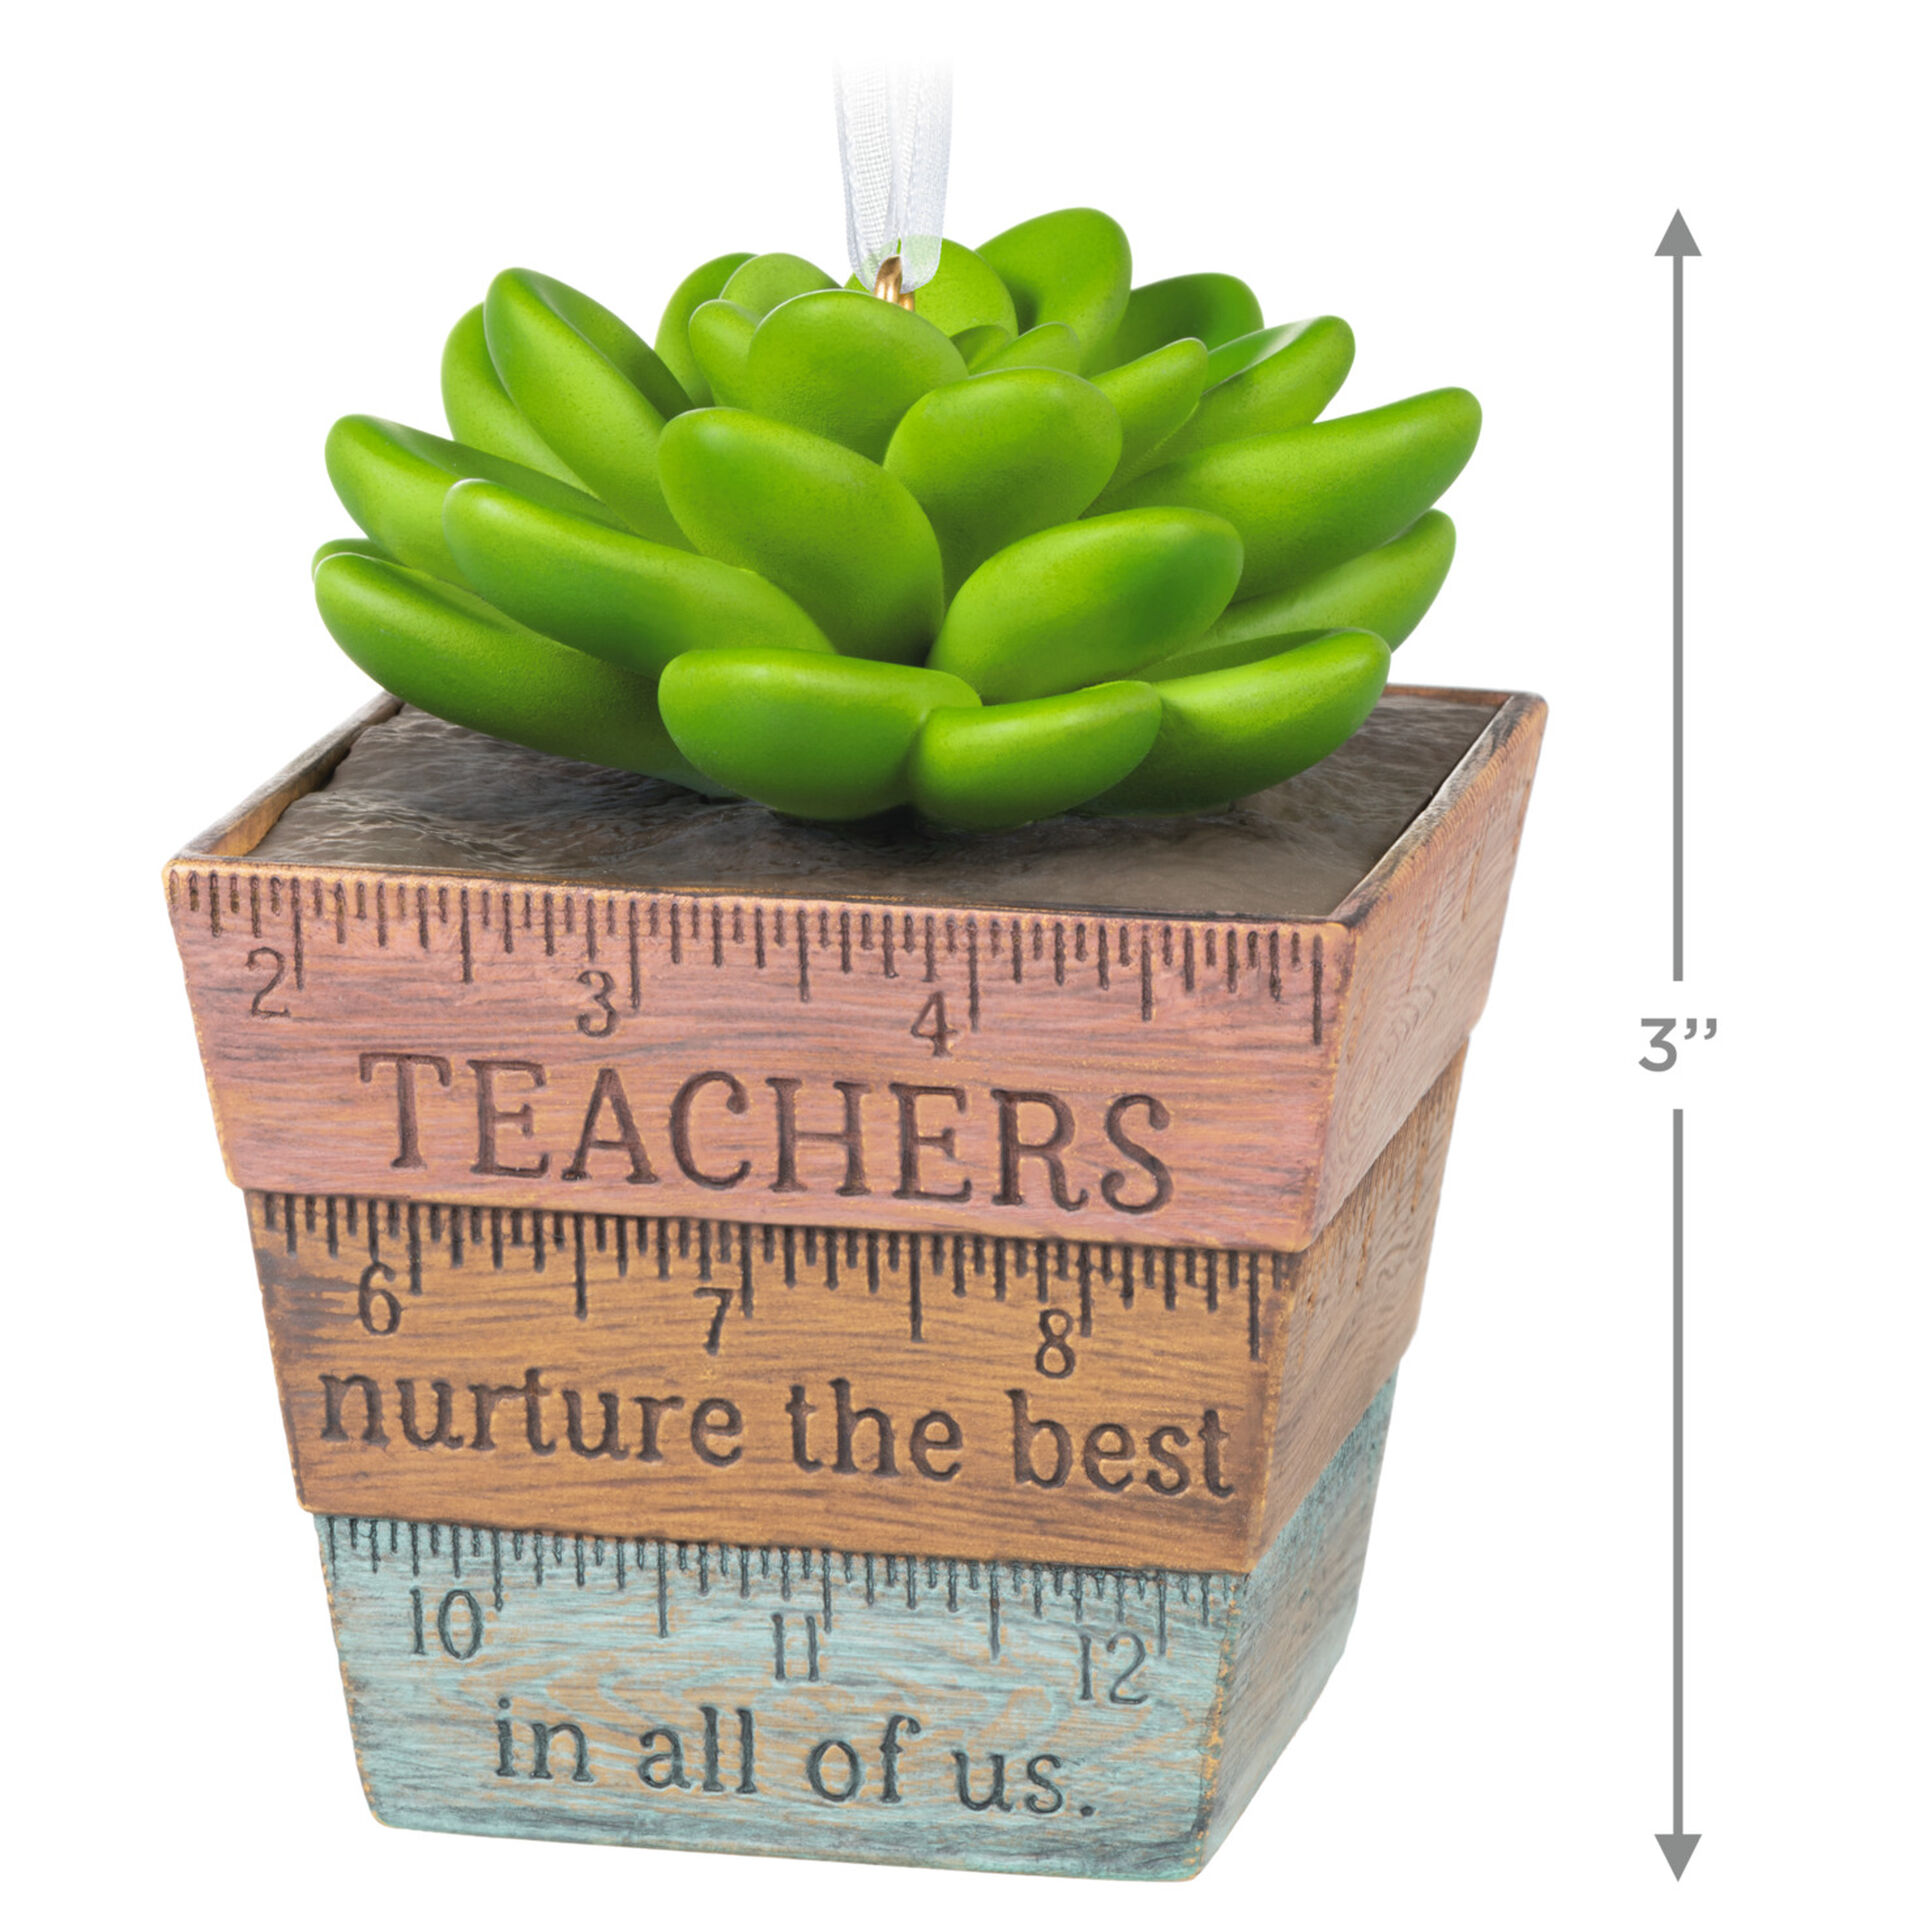 Hallmark QHX4012 Thank You, Teacher! Succulent Planter 2021 Ornament - image 2 of 6